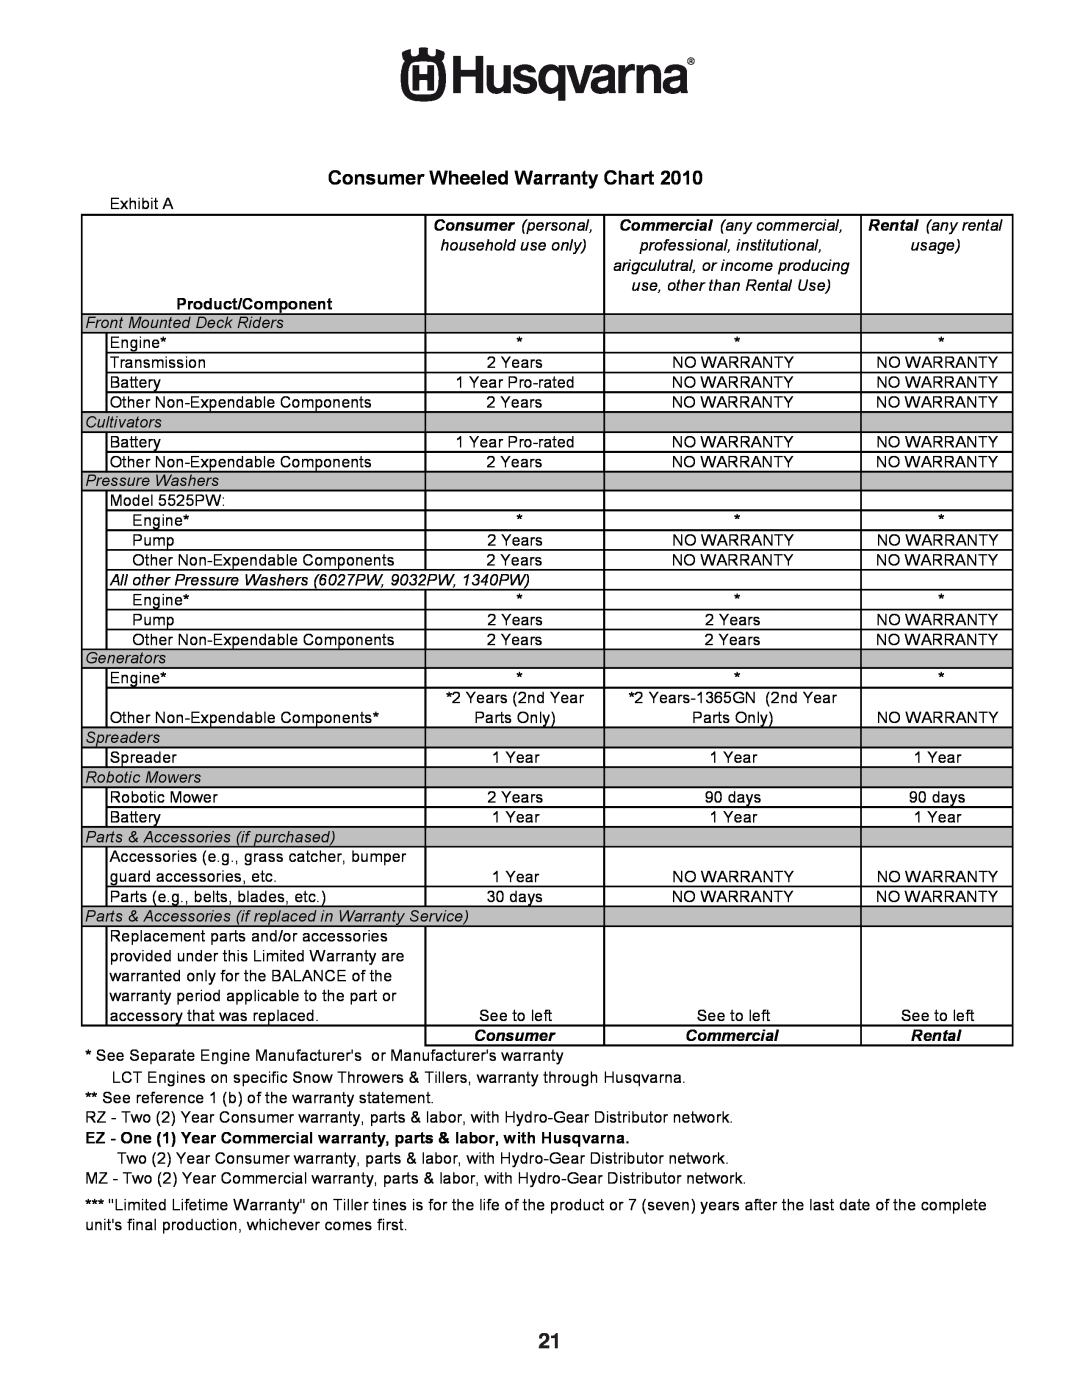 Husqvarna HU800BBC manual Consumer Wheeled Warranty Chart, Product/Component, Commercial, Rental 